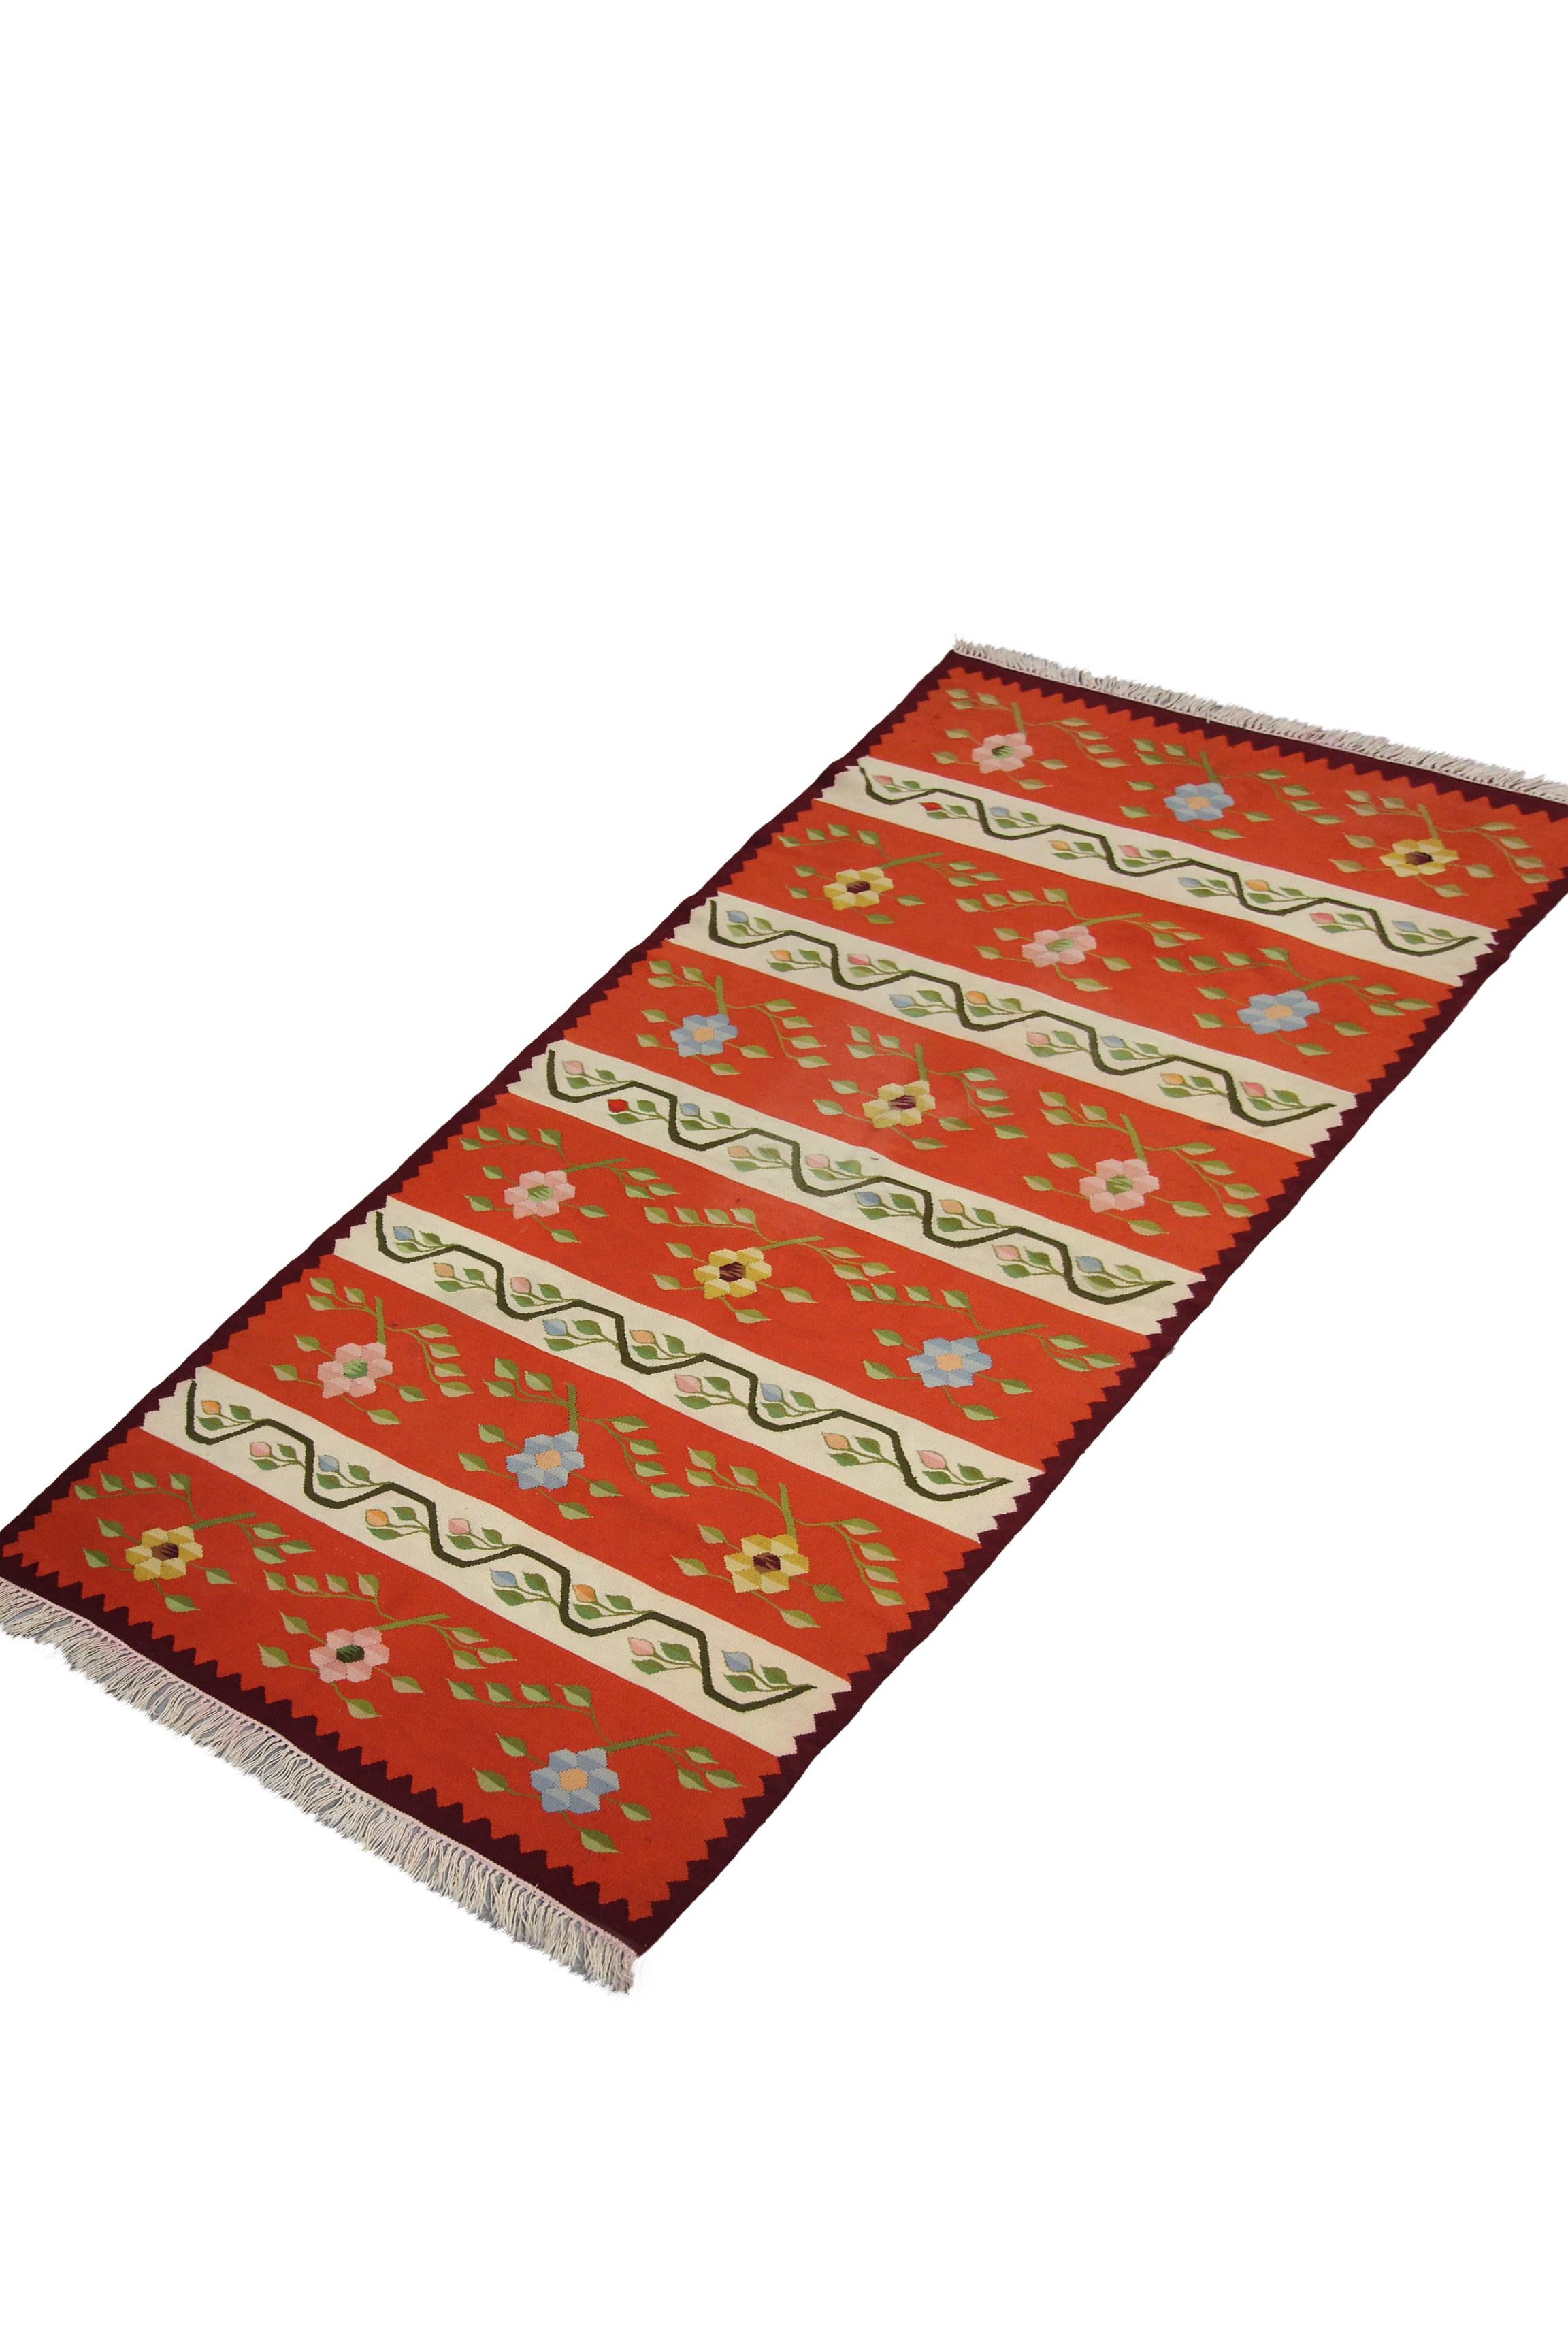 Moldovan Orange Striped Kilim Rug Traditional Moldavian Wool Area Rug, Handmade Carpet  For Sale